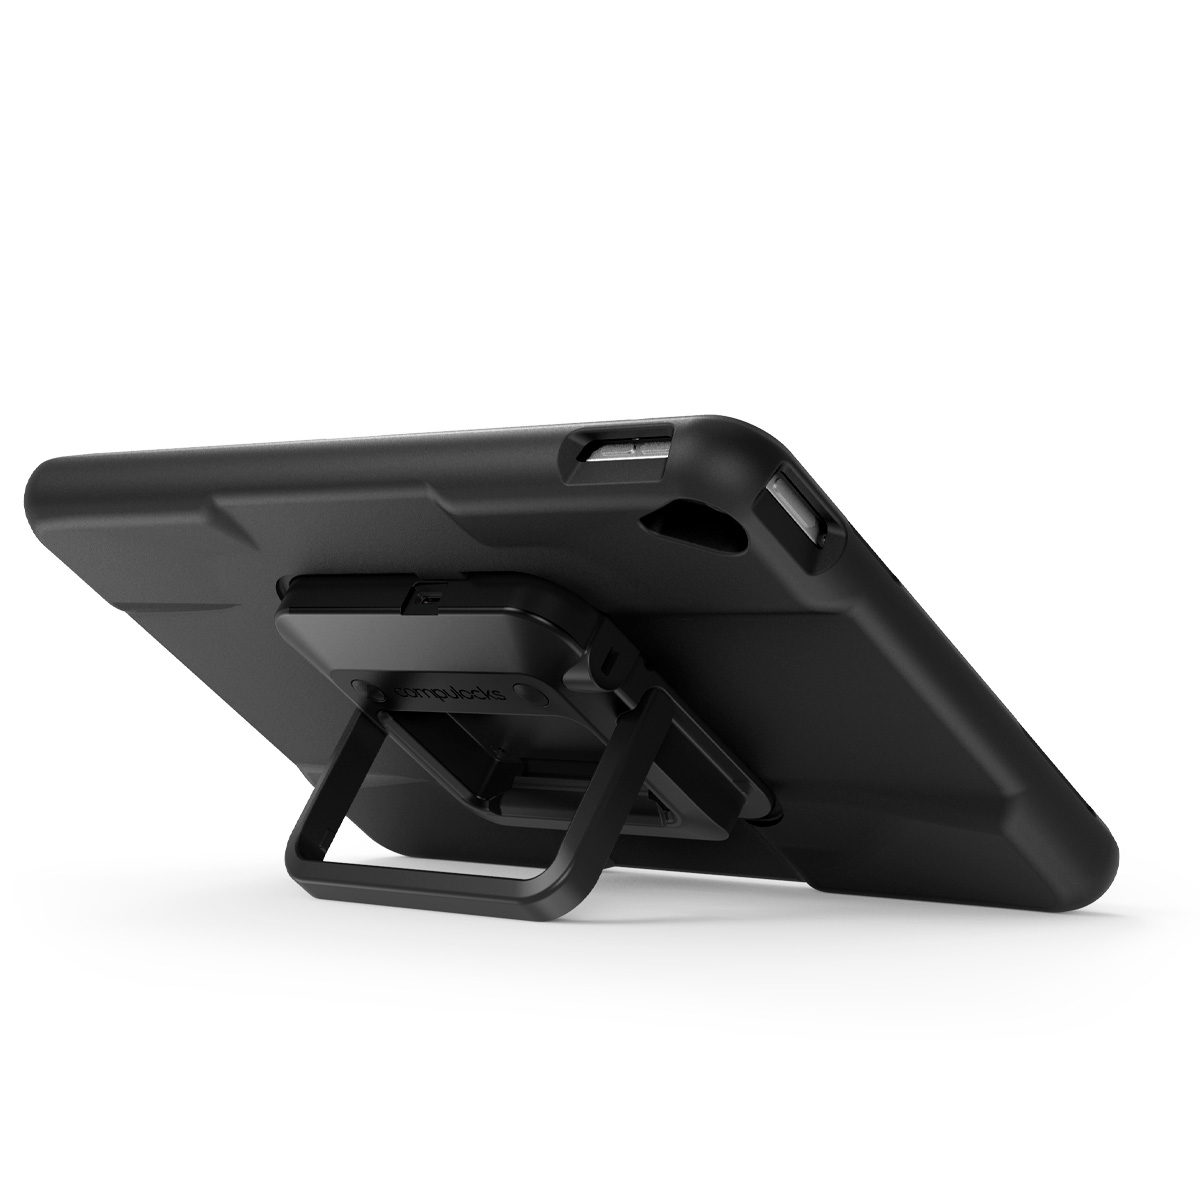 Integrated kickstand on tablet side